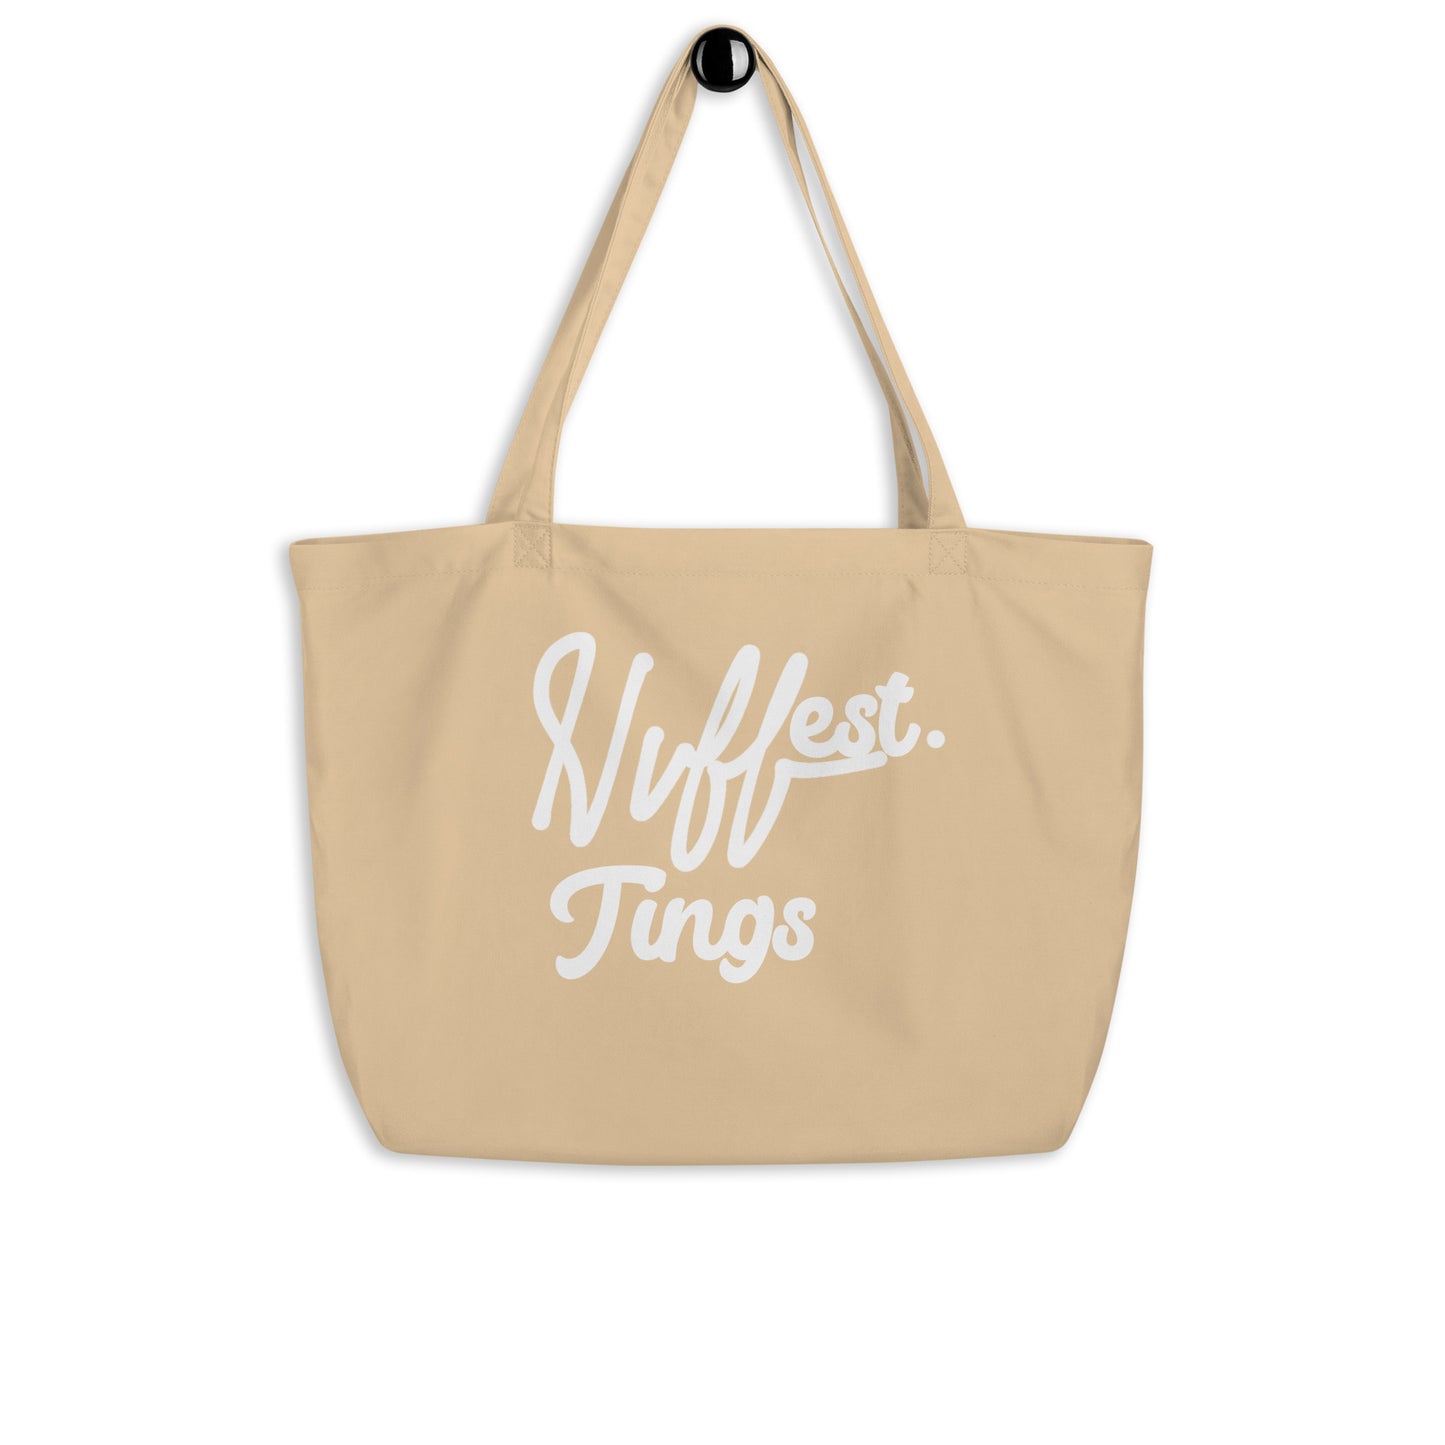 NUFFest Tings - Tote Bag